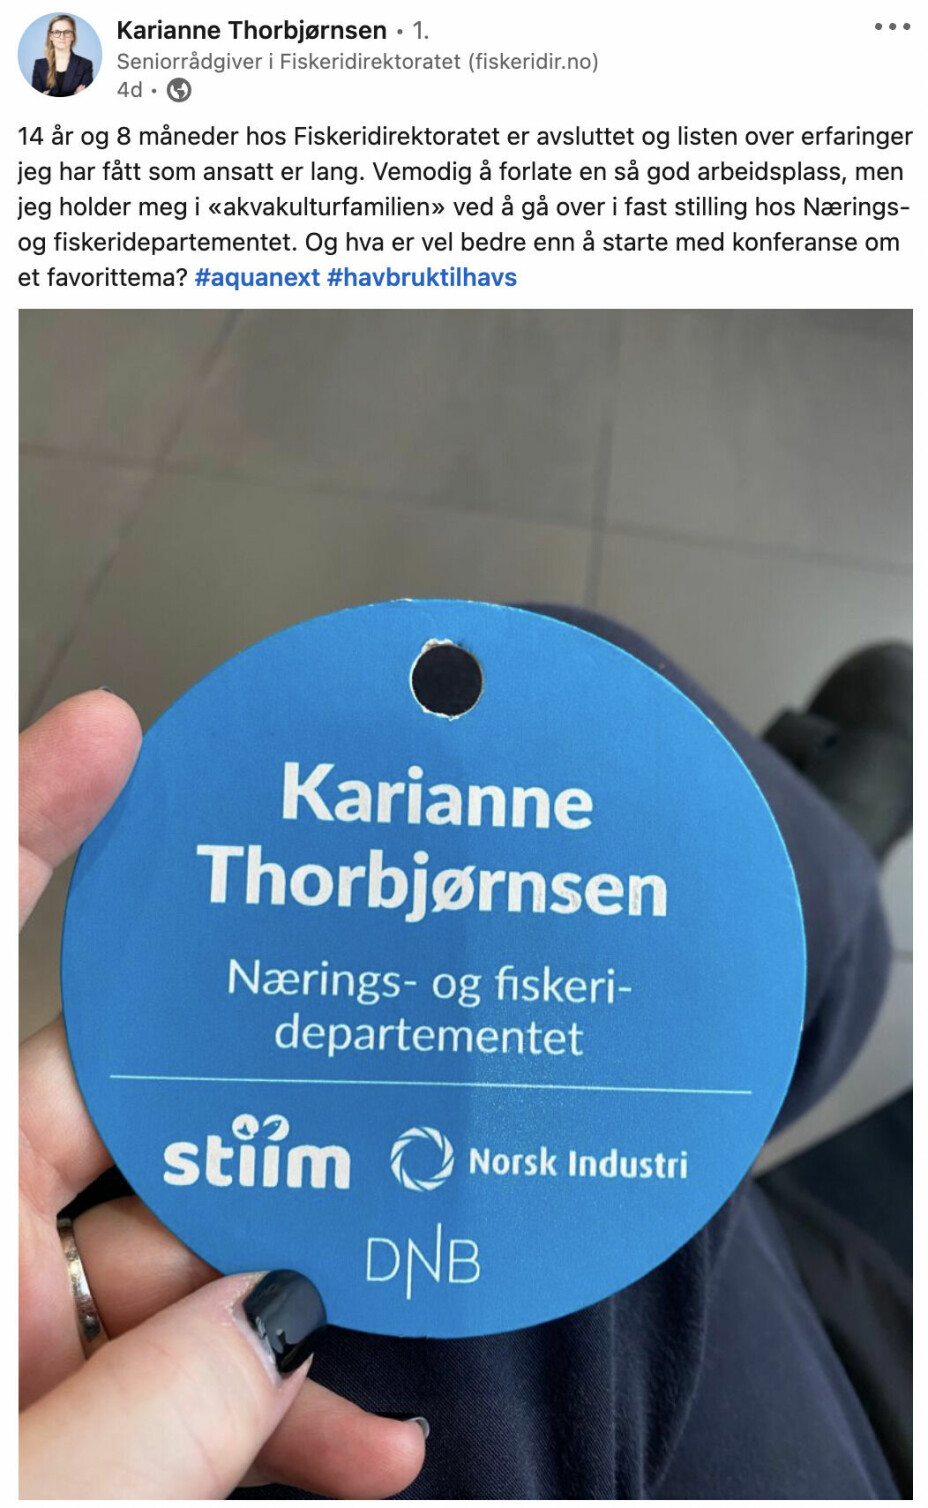 Karianne Thorbjørnsen deltok nylig på AquaNext i Stavanger, der hun la ut denne posten.